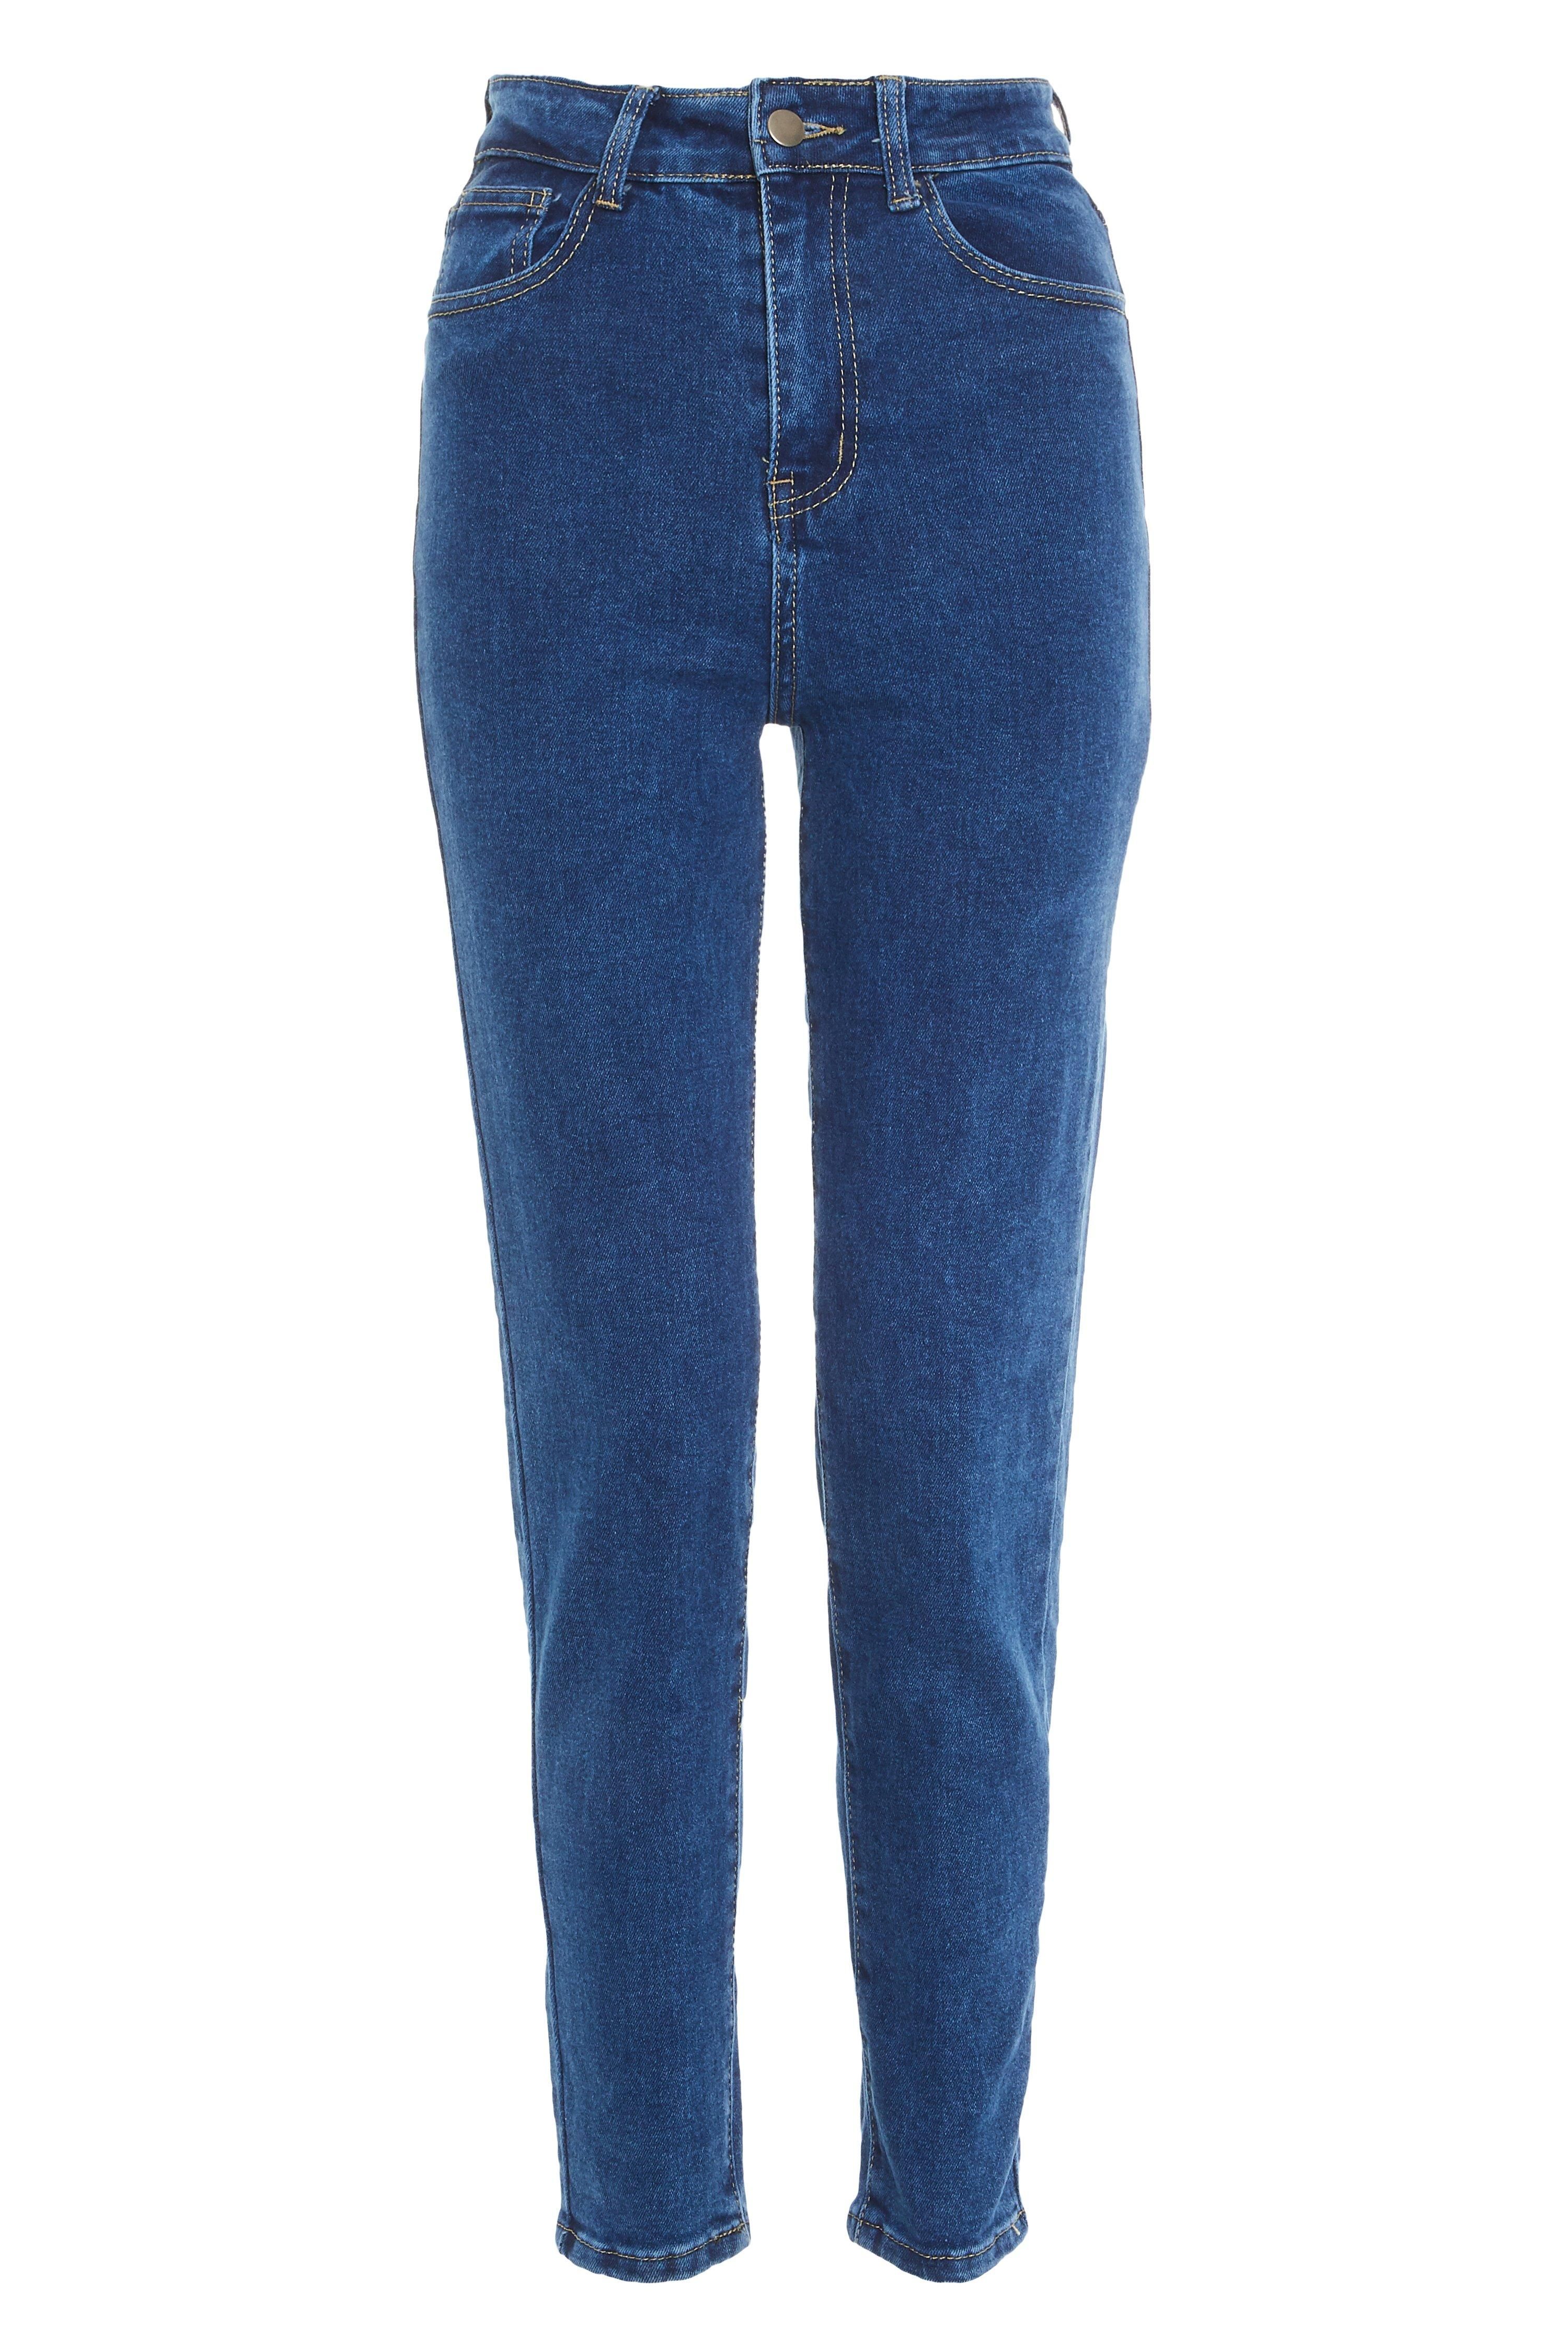 - Mom jeans  - Dark blue denim   - High waist  - Belt loops